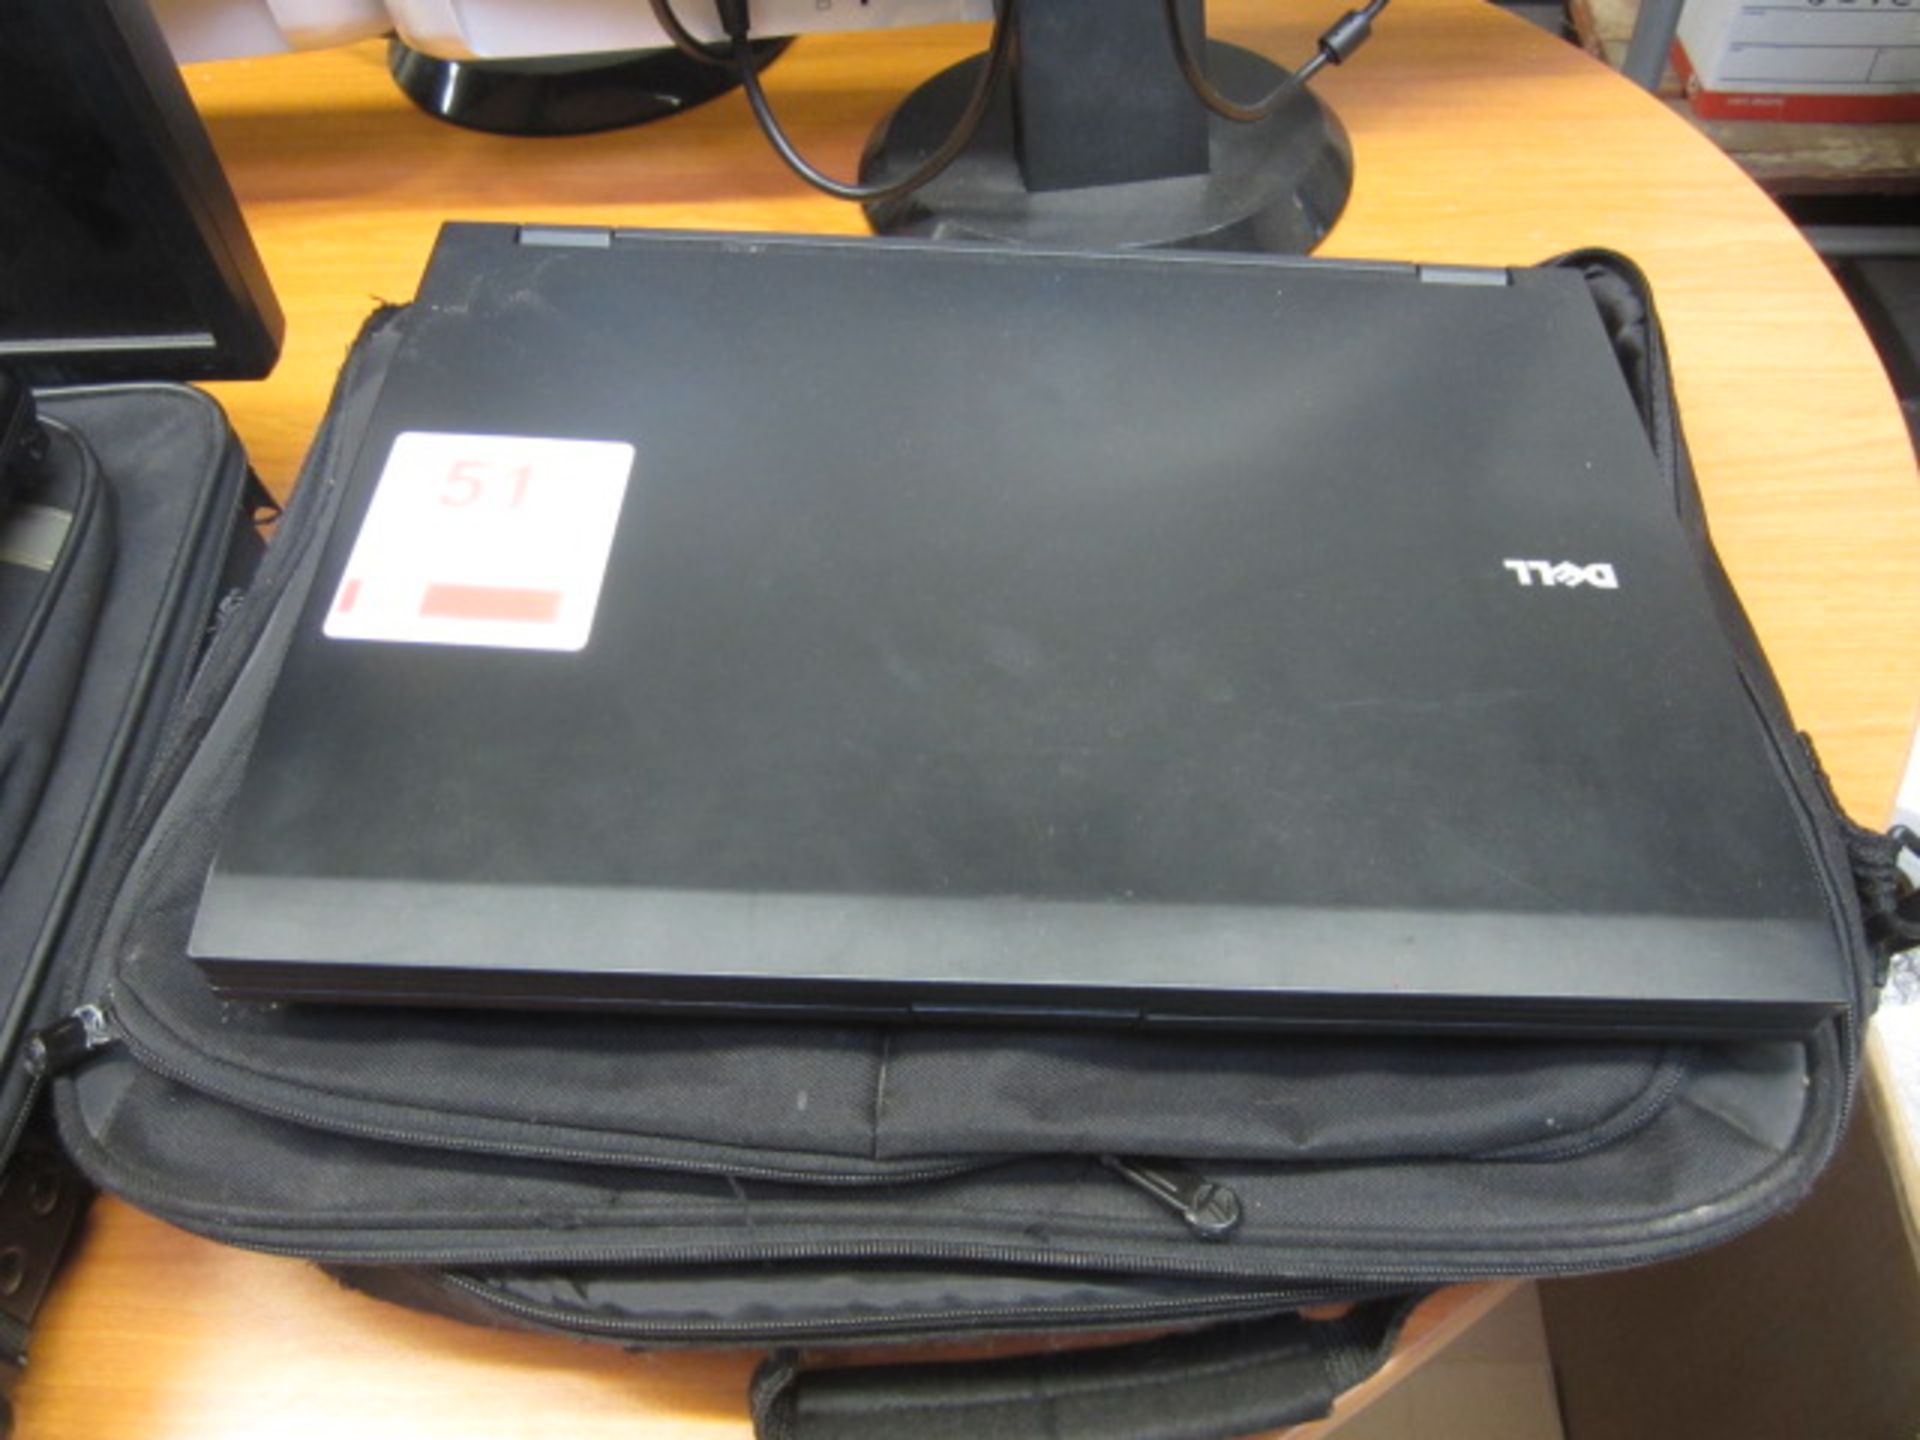 Dell Latitude E5500 Core 2 Duo laptop and case - Image 2 of 3